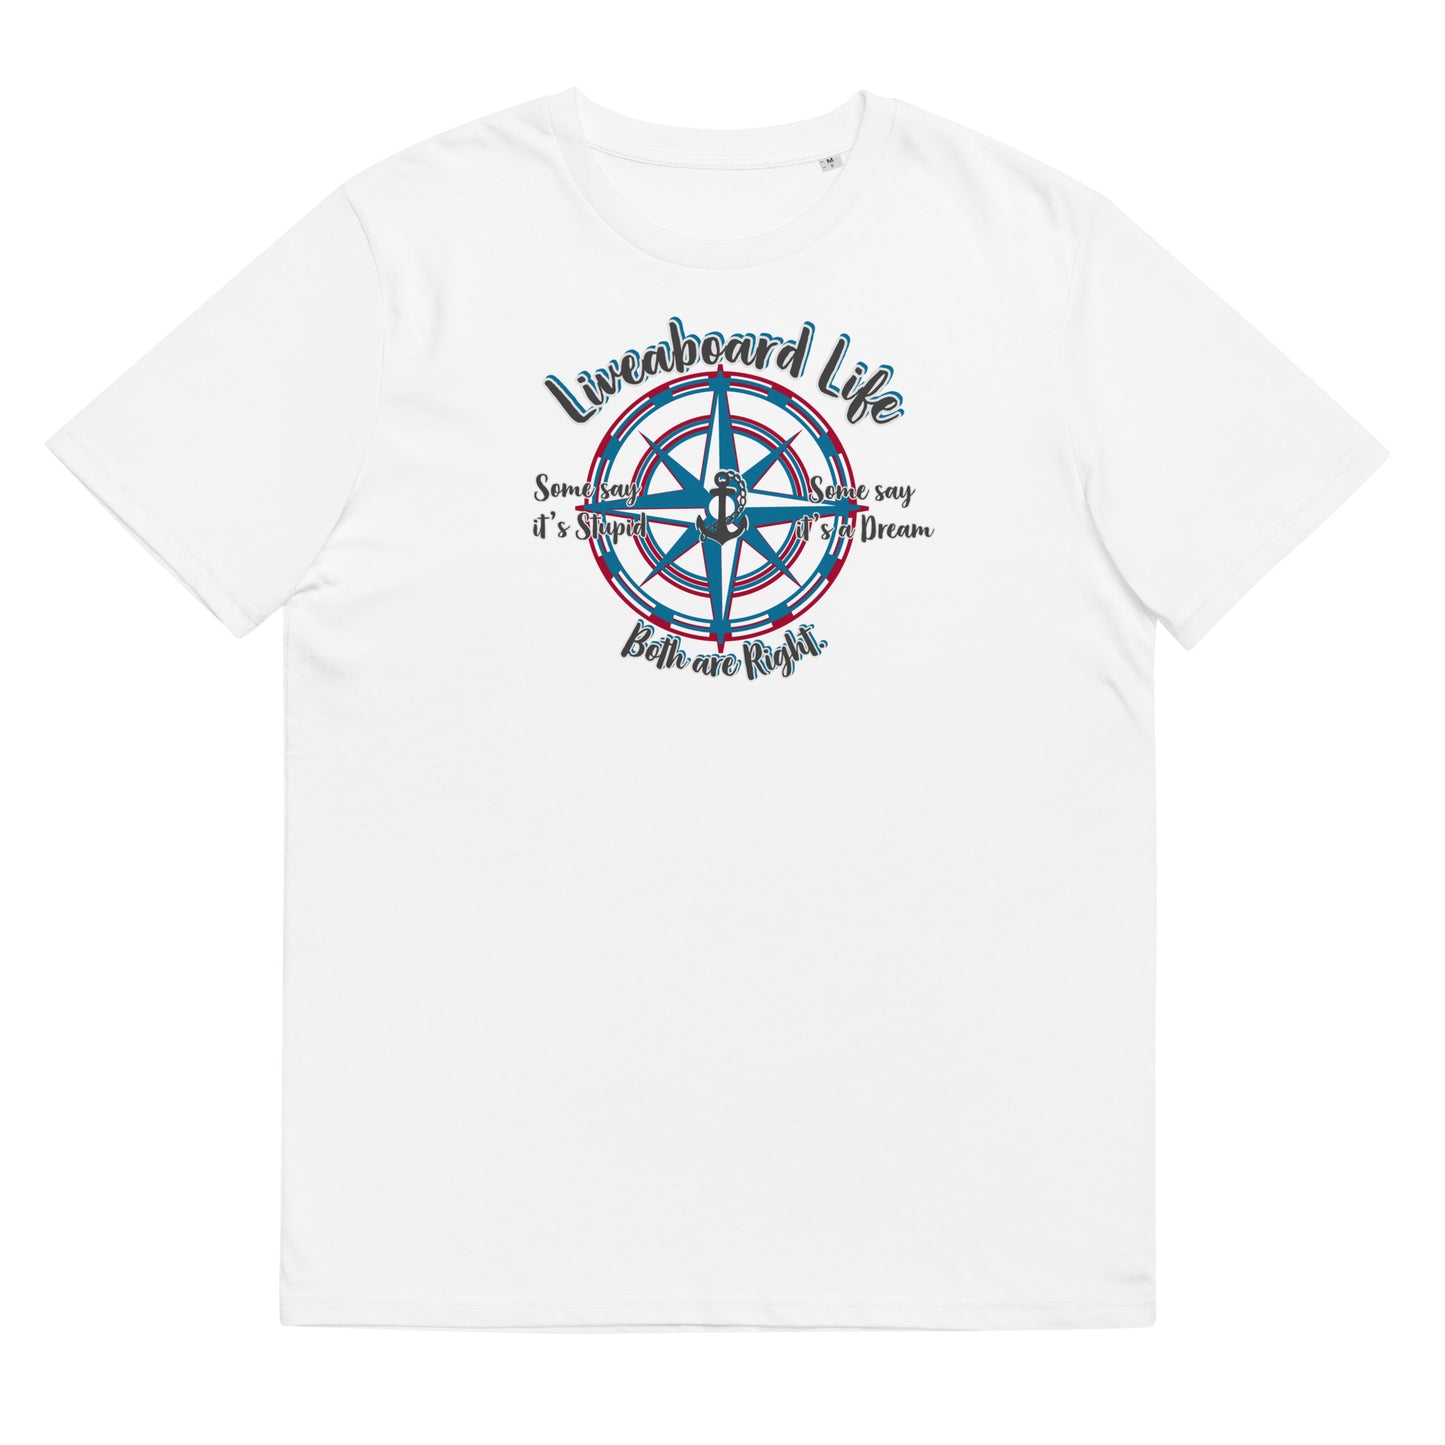 Nautical shirt liveaboard life